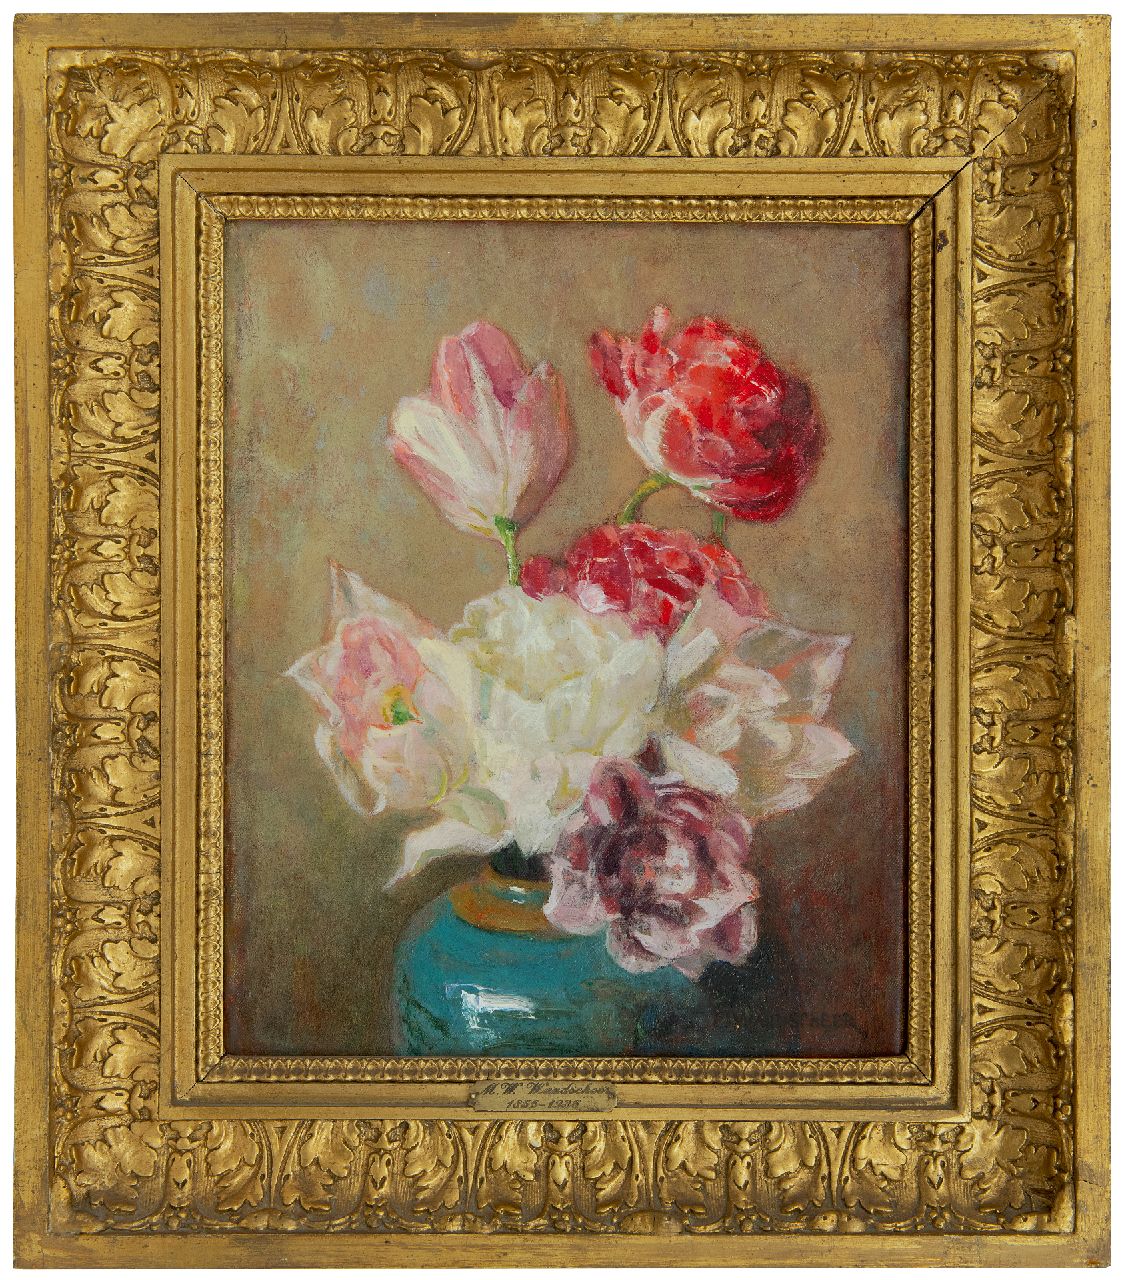 Wandscheer M.W.  | Maria Wilhelmina 'Marie' Wandscheer, Double tulips in ginger jar, oil on canvas 30.0 x 23.8 cm, signed l.r.